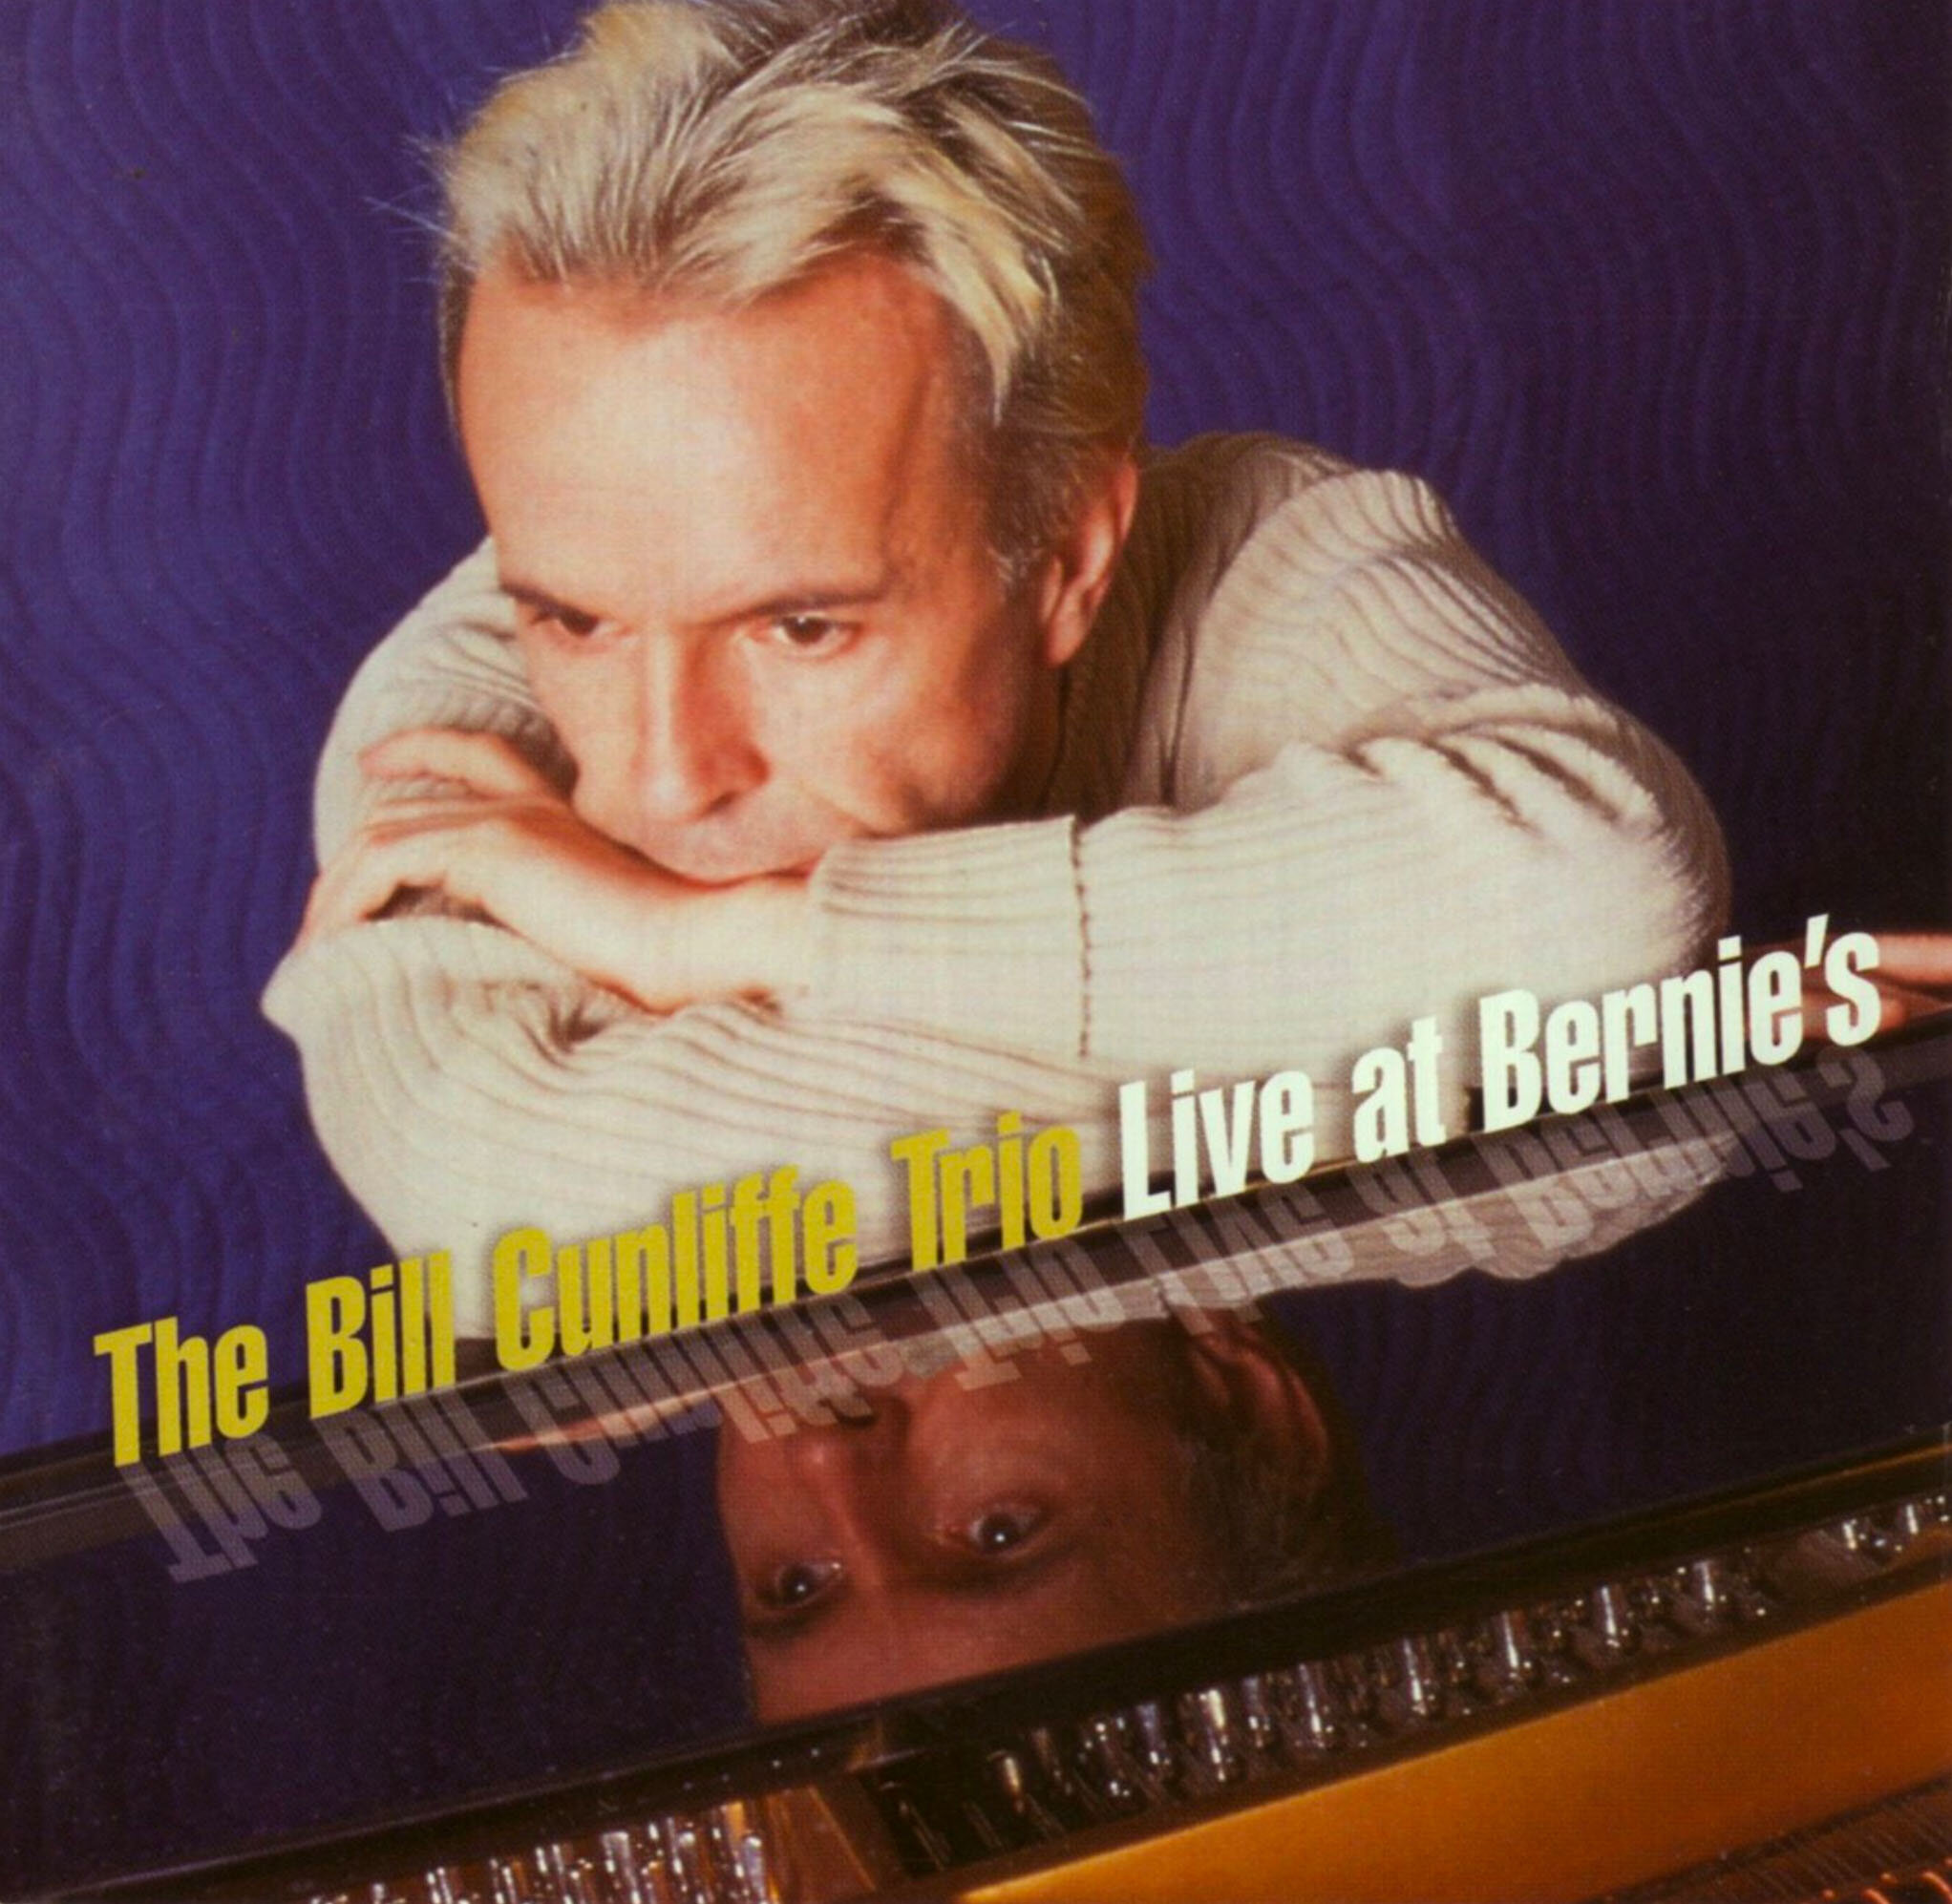 live-at-bernie's-bill-cunliffe-trio-2001-1.jpg